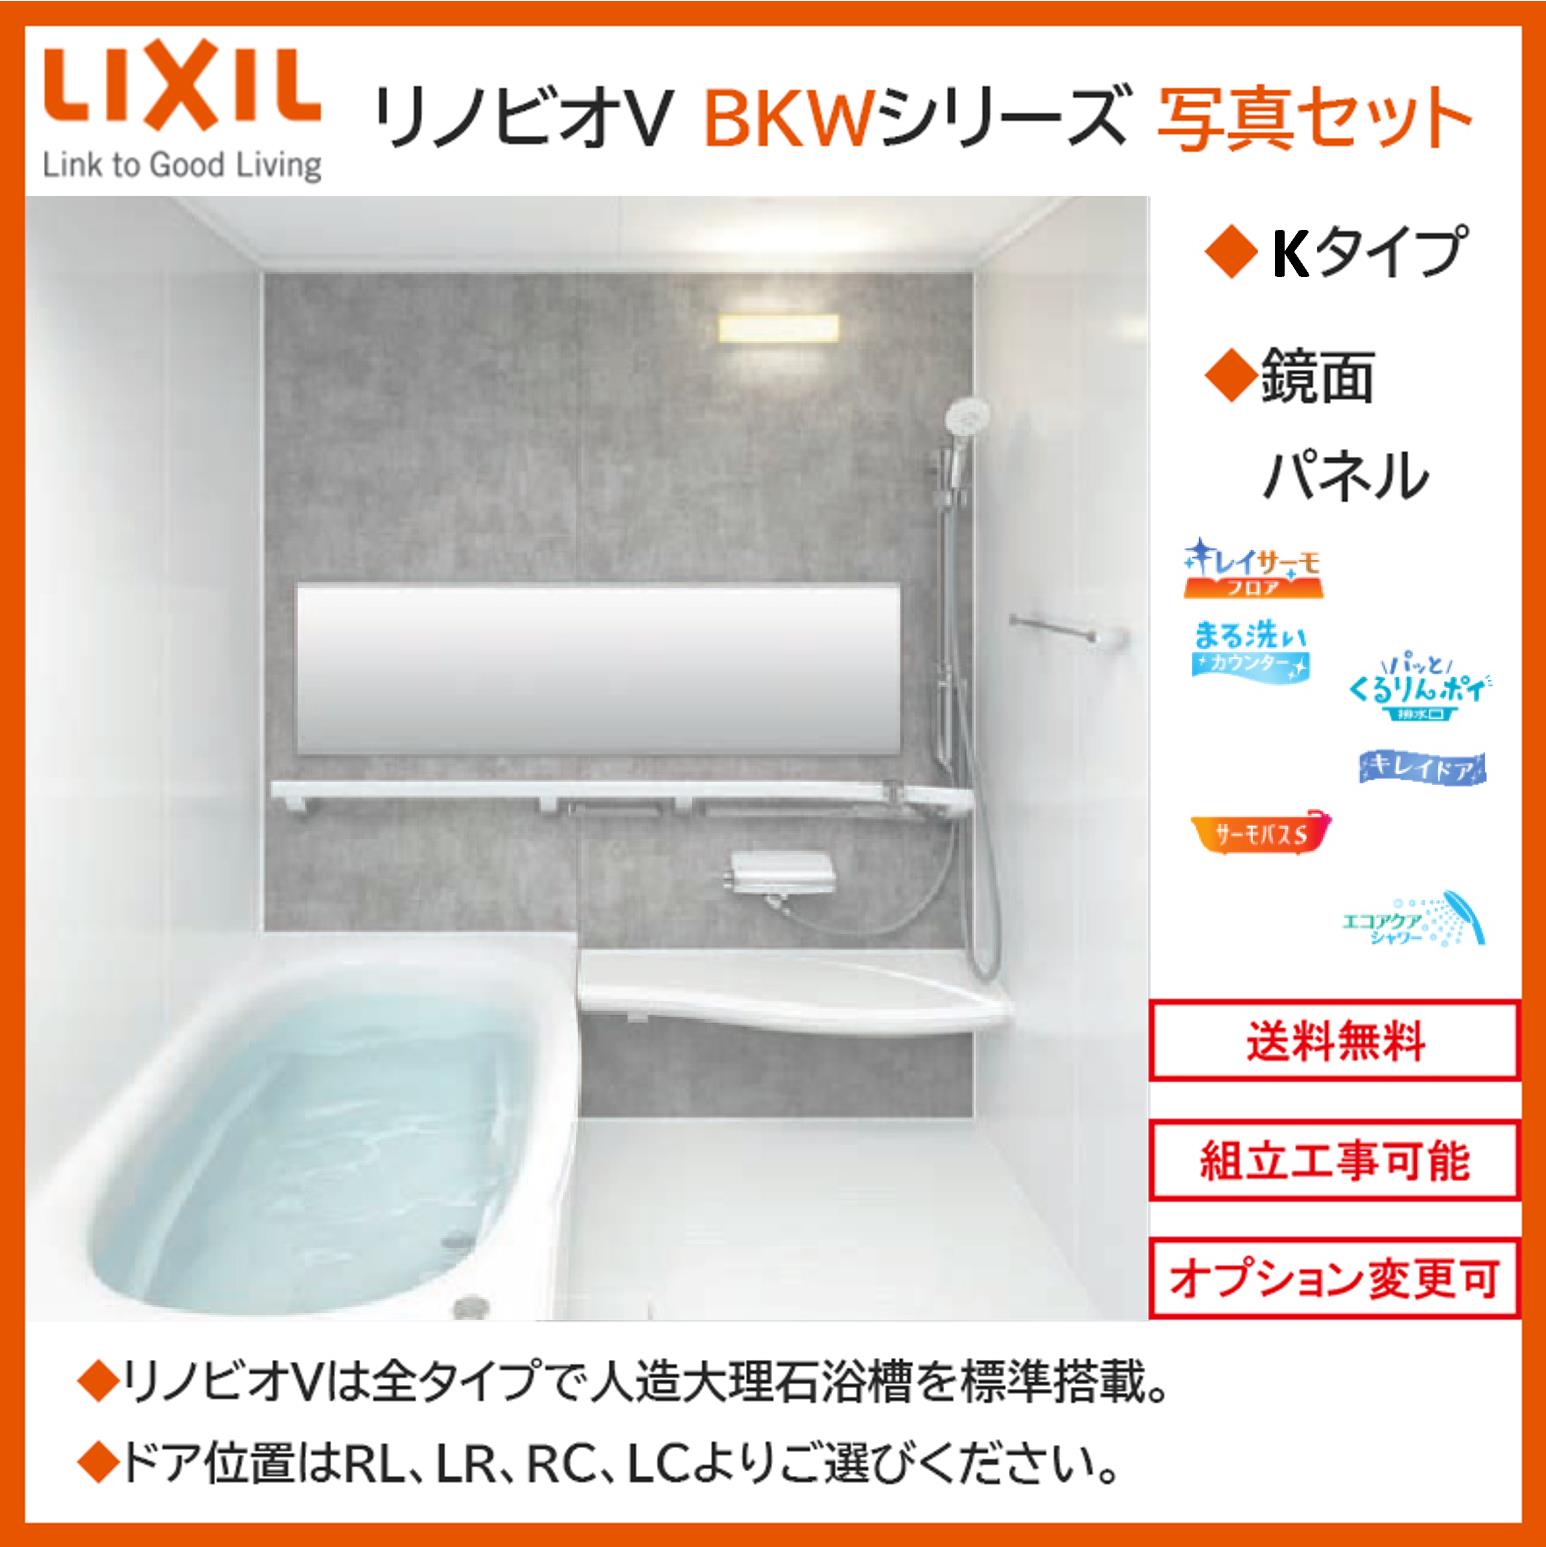 LIXIL リノビオV BKWシリーズ Kタイプ 1216サイズ 写真セット 鏡面パネル BKW-1216LBK システムバスルーム（オプション対応，メーカー直送）【送料無料】